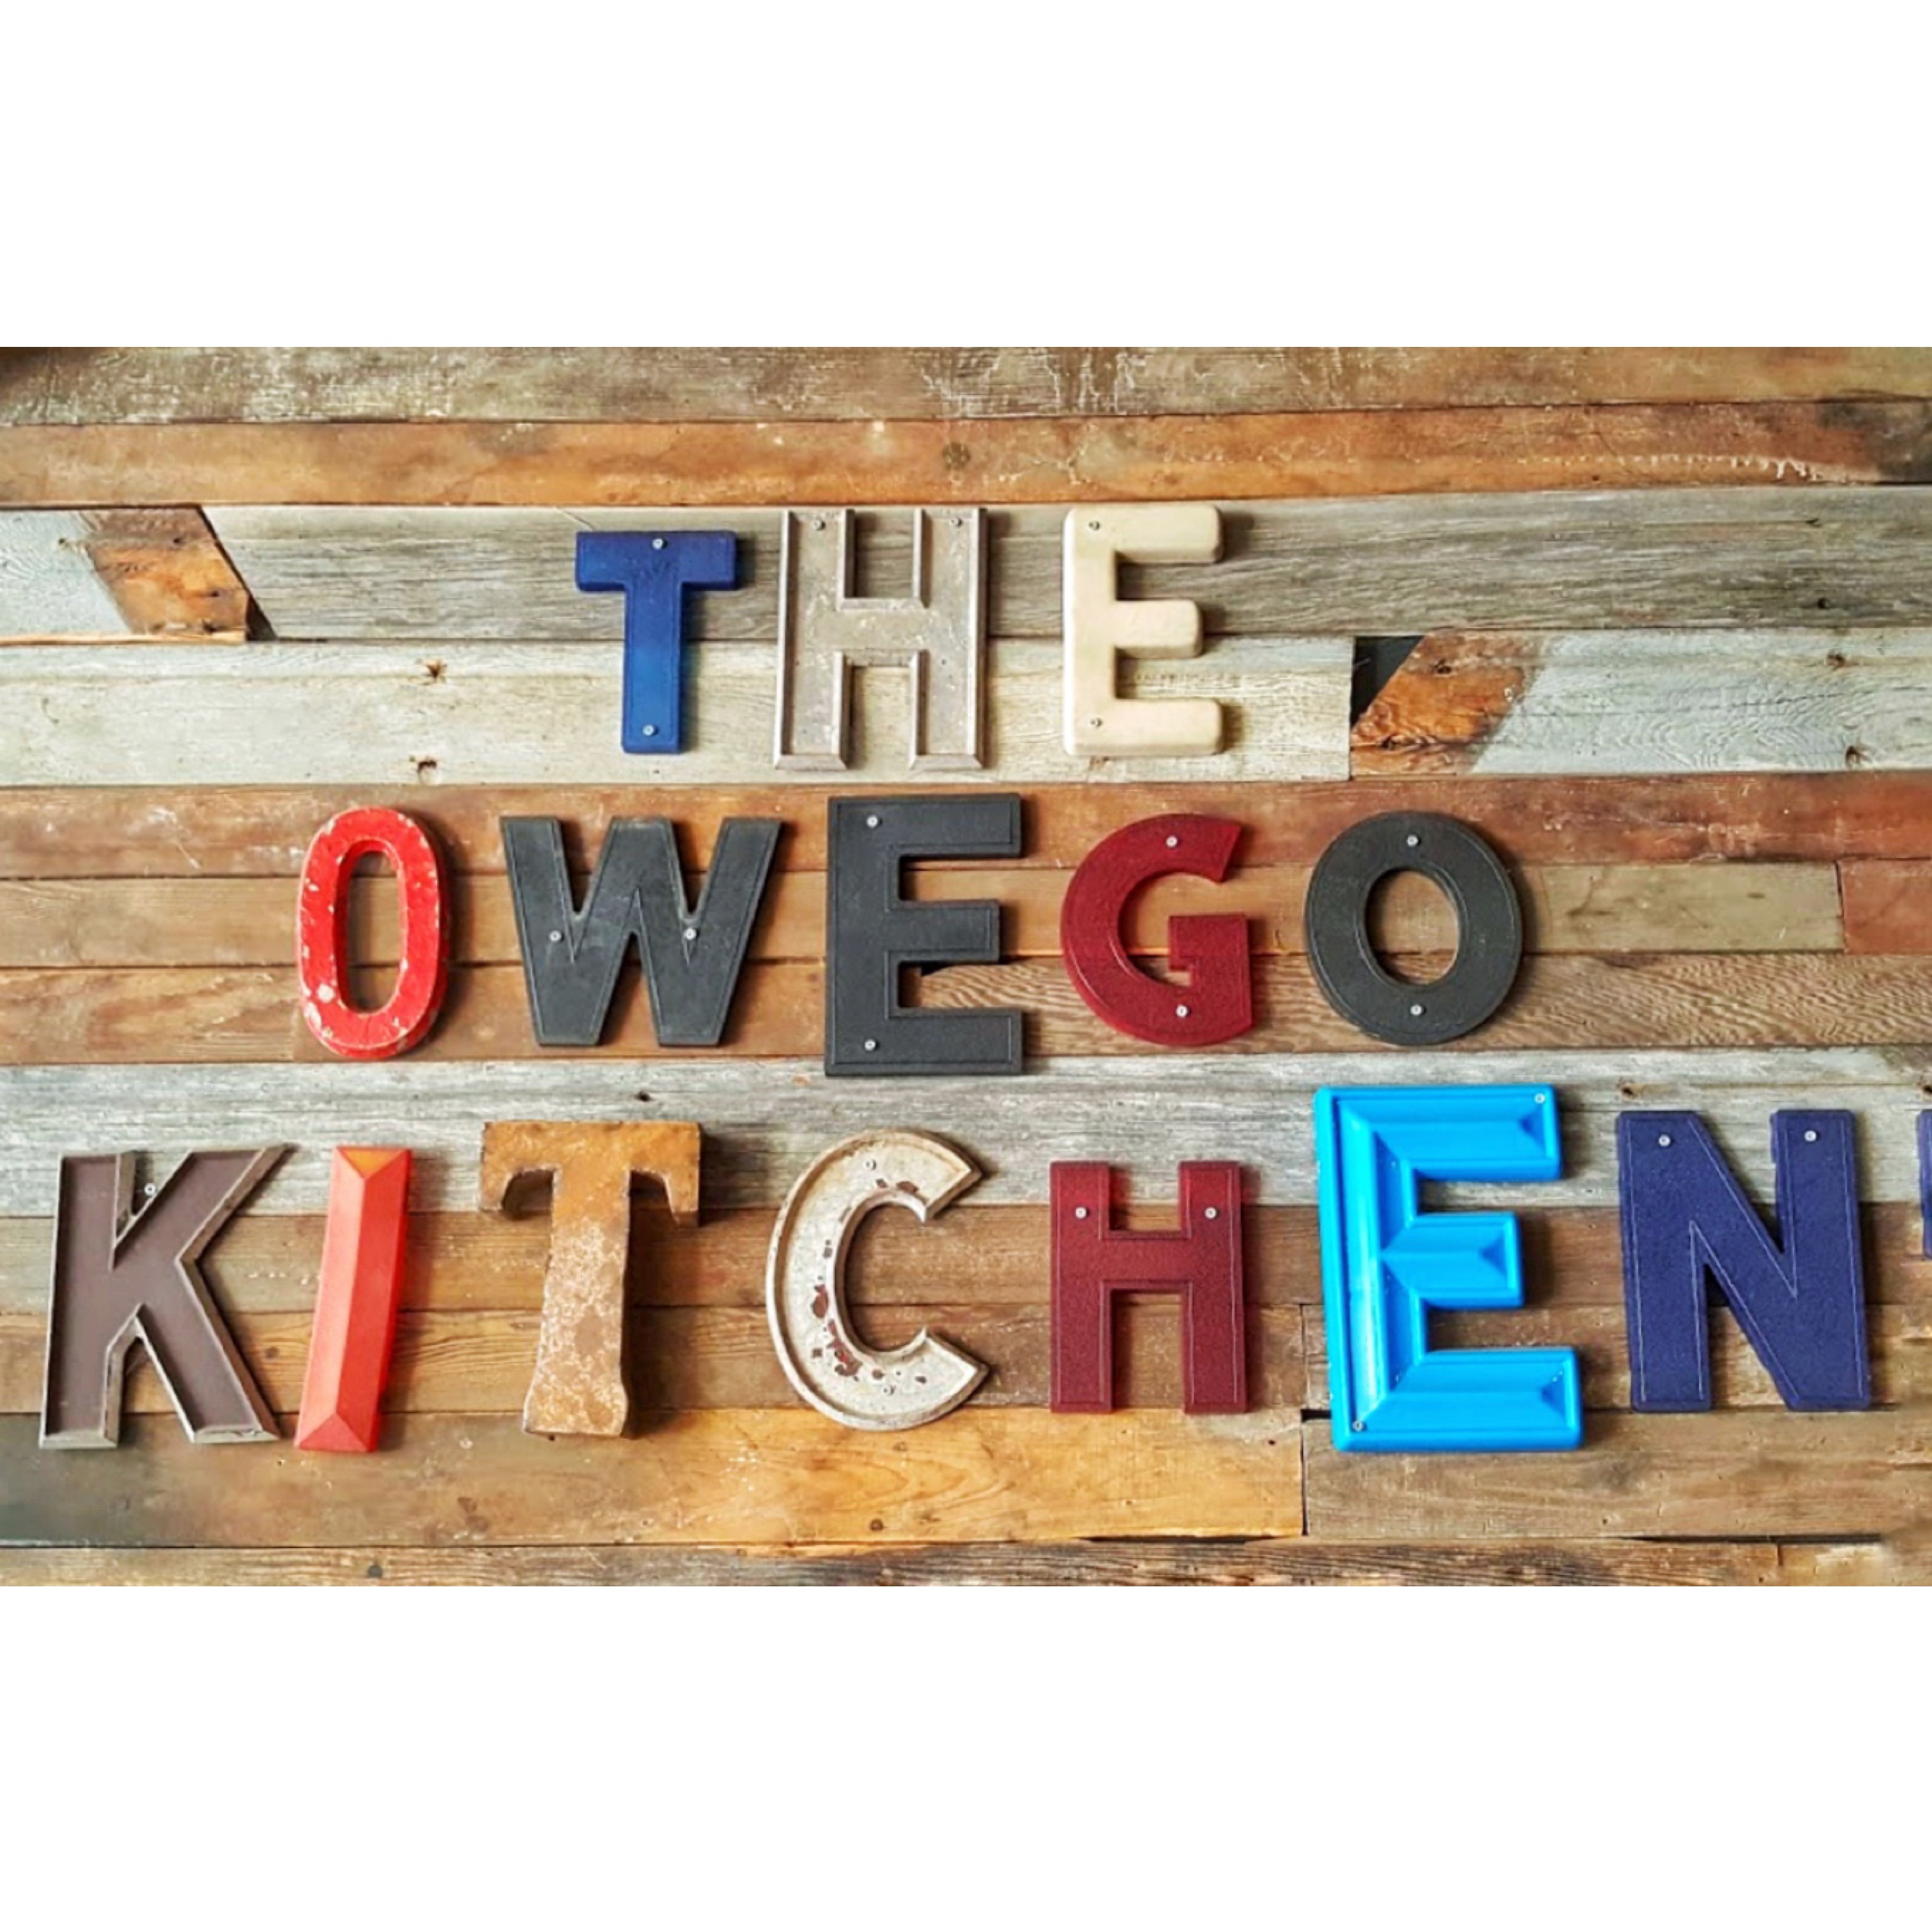 The Owego Kitchen